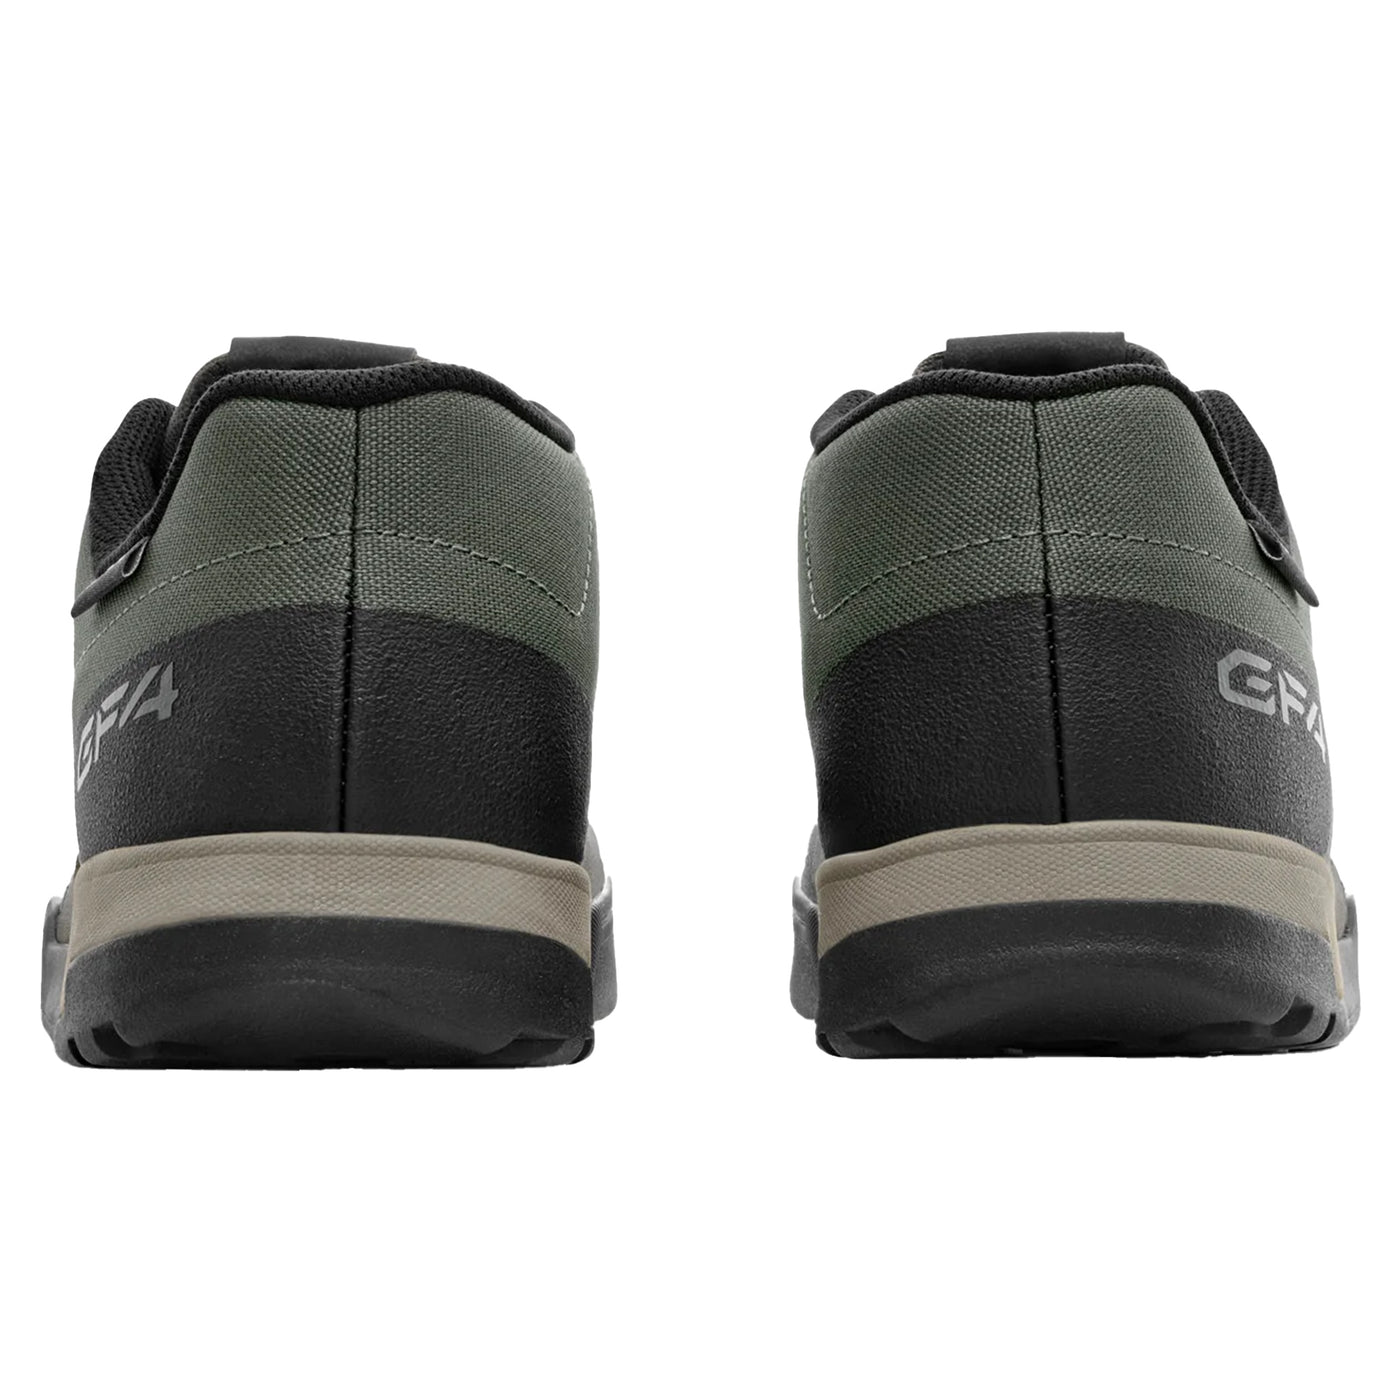 SH-GF400 Flat Pedal Shoes